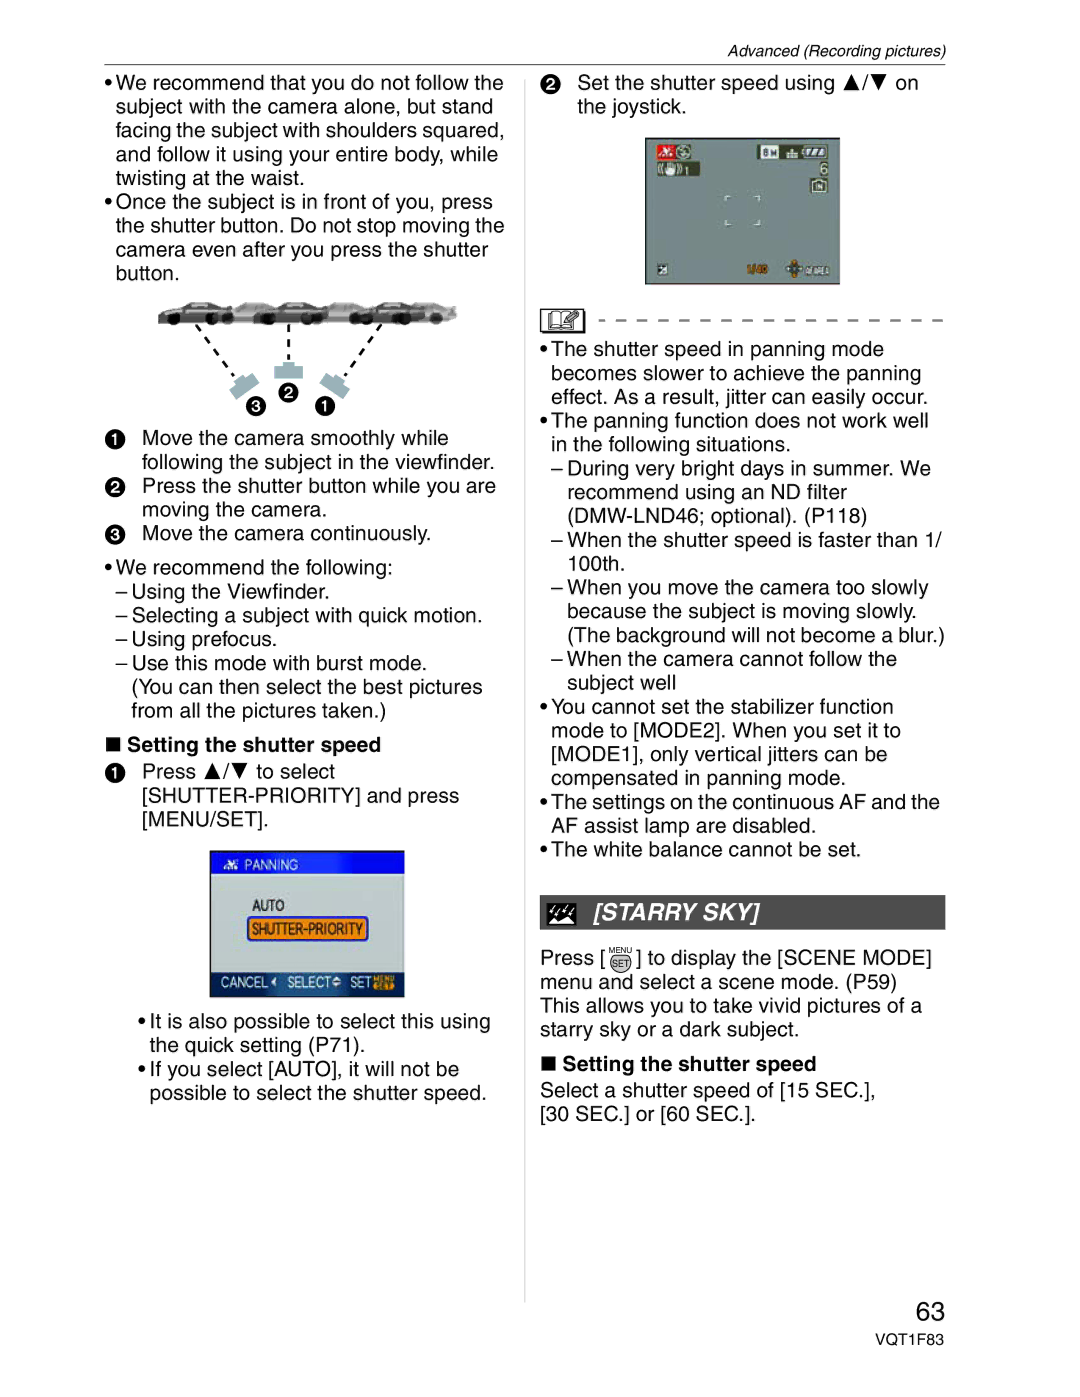 Panasonic DMC-FZ18 operating instructions Starry SKY, Setting the shutter speed 